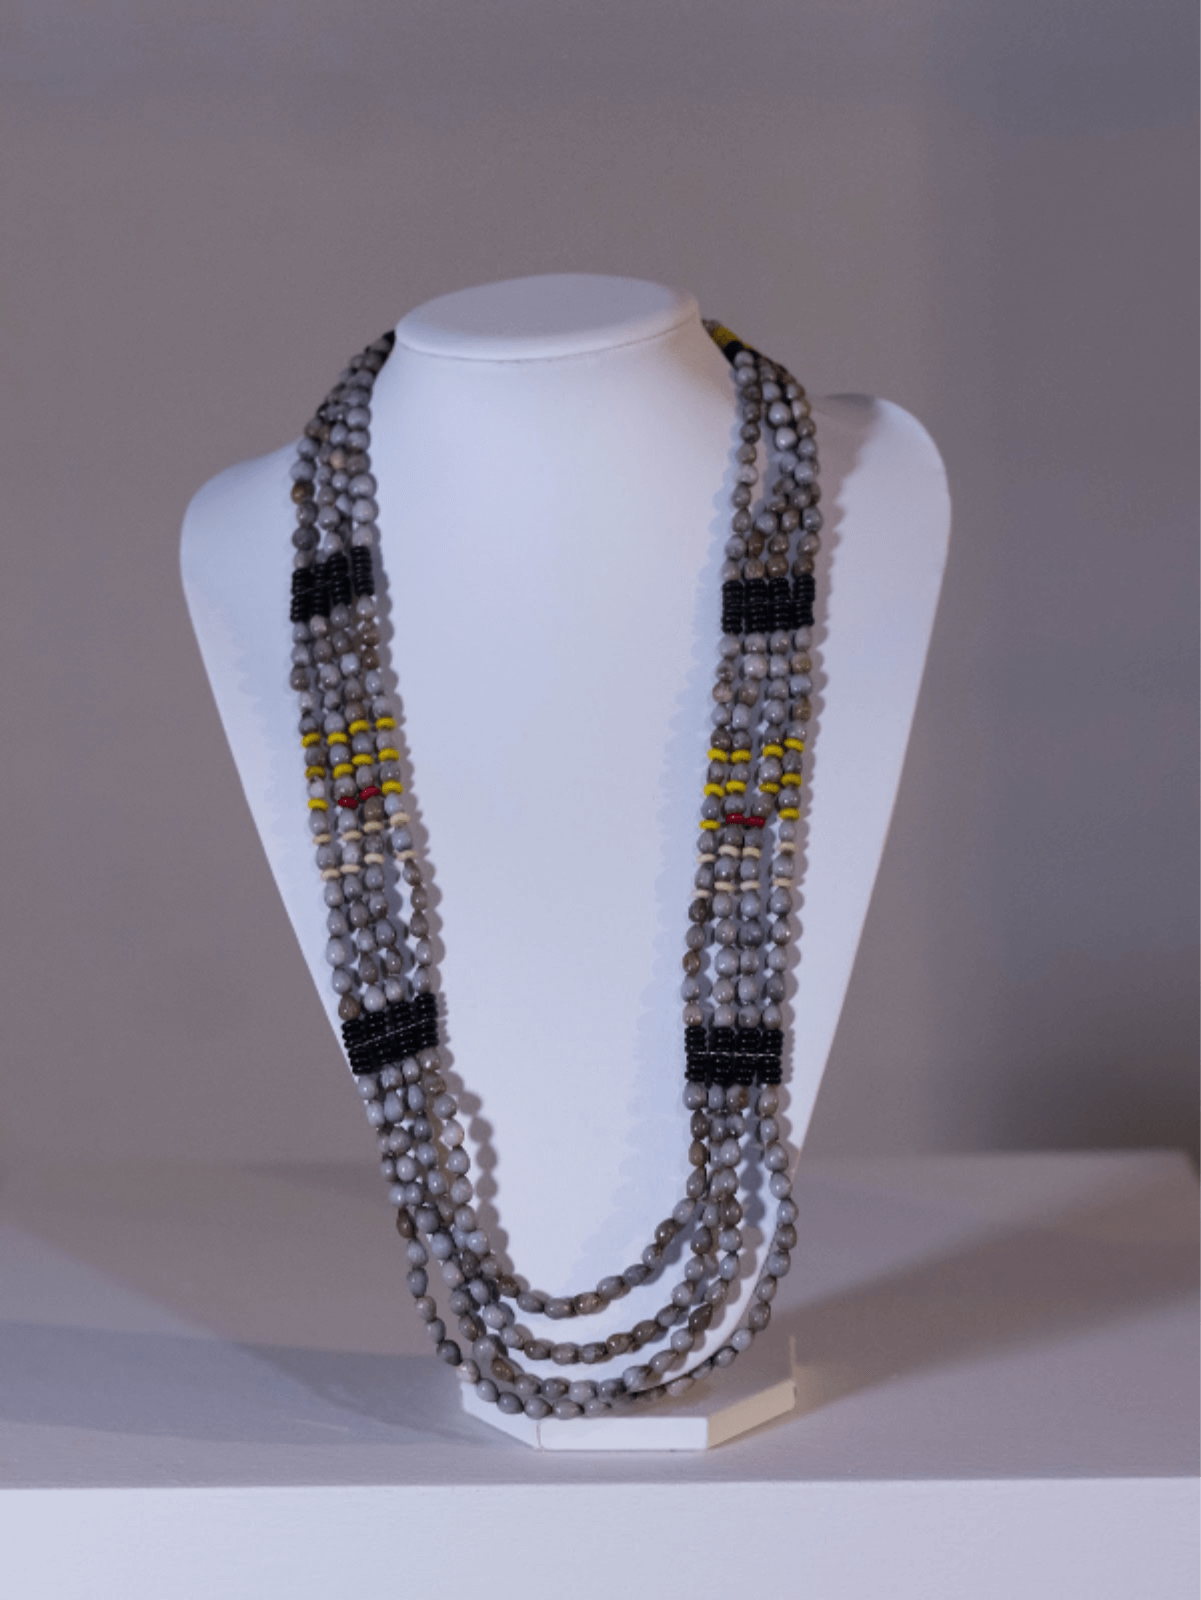 Sino Ku Biradu Ponu - Wearable Traditional Bidayuh Pangieh Juli Made Of Job Tear Seeds (Dalai) And Assorted White Beads